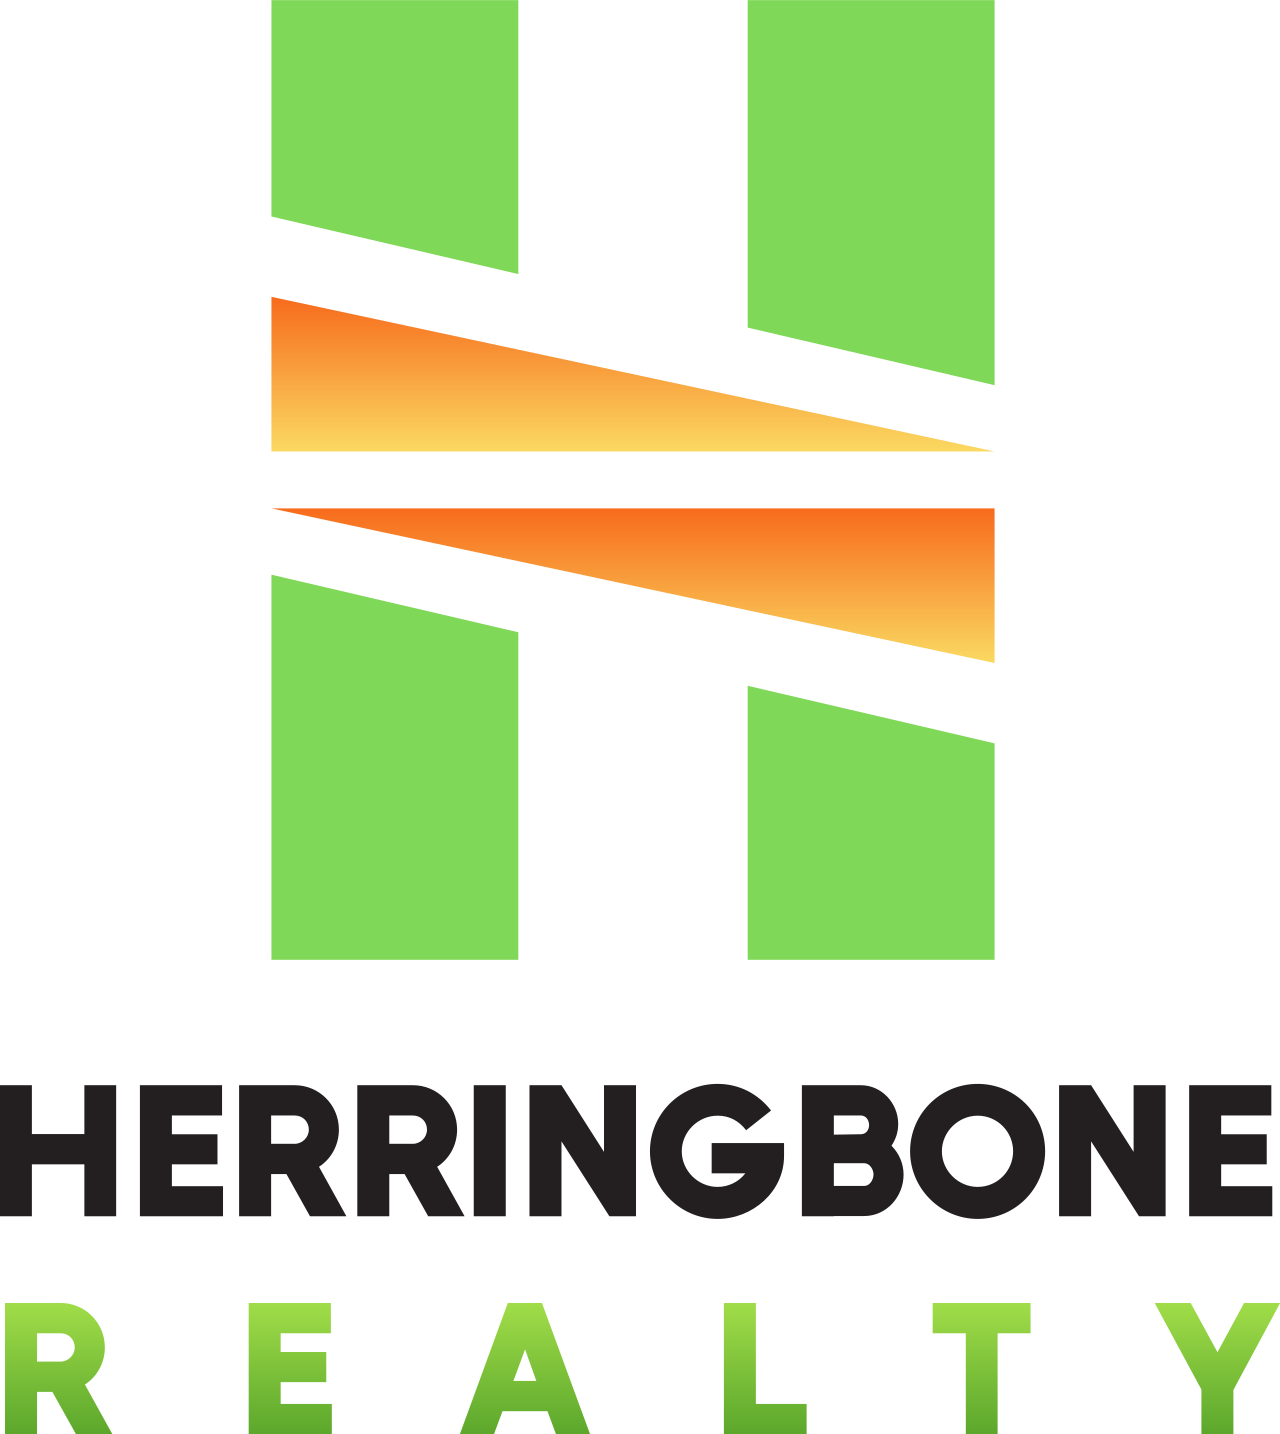 Herringbone Realty Co.'s web page